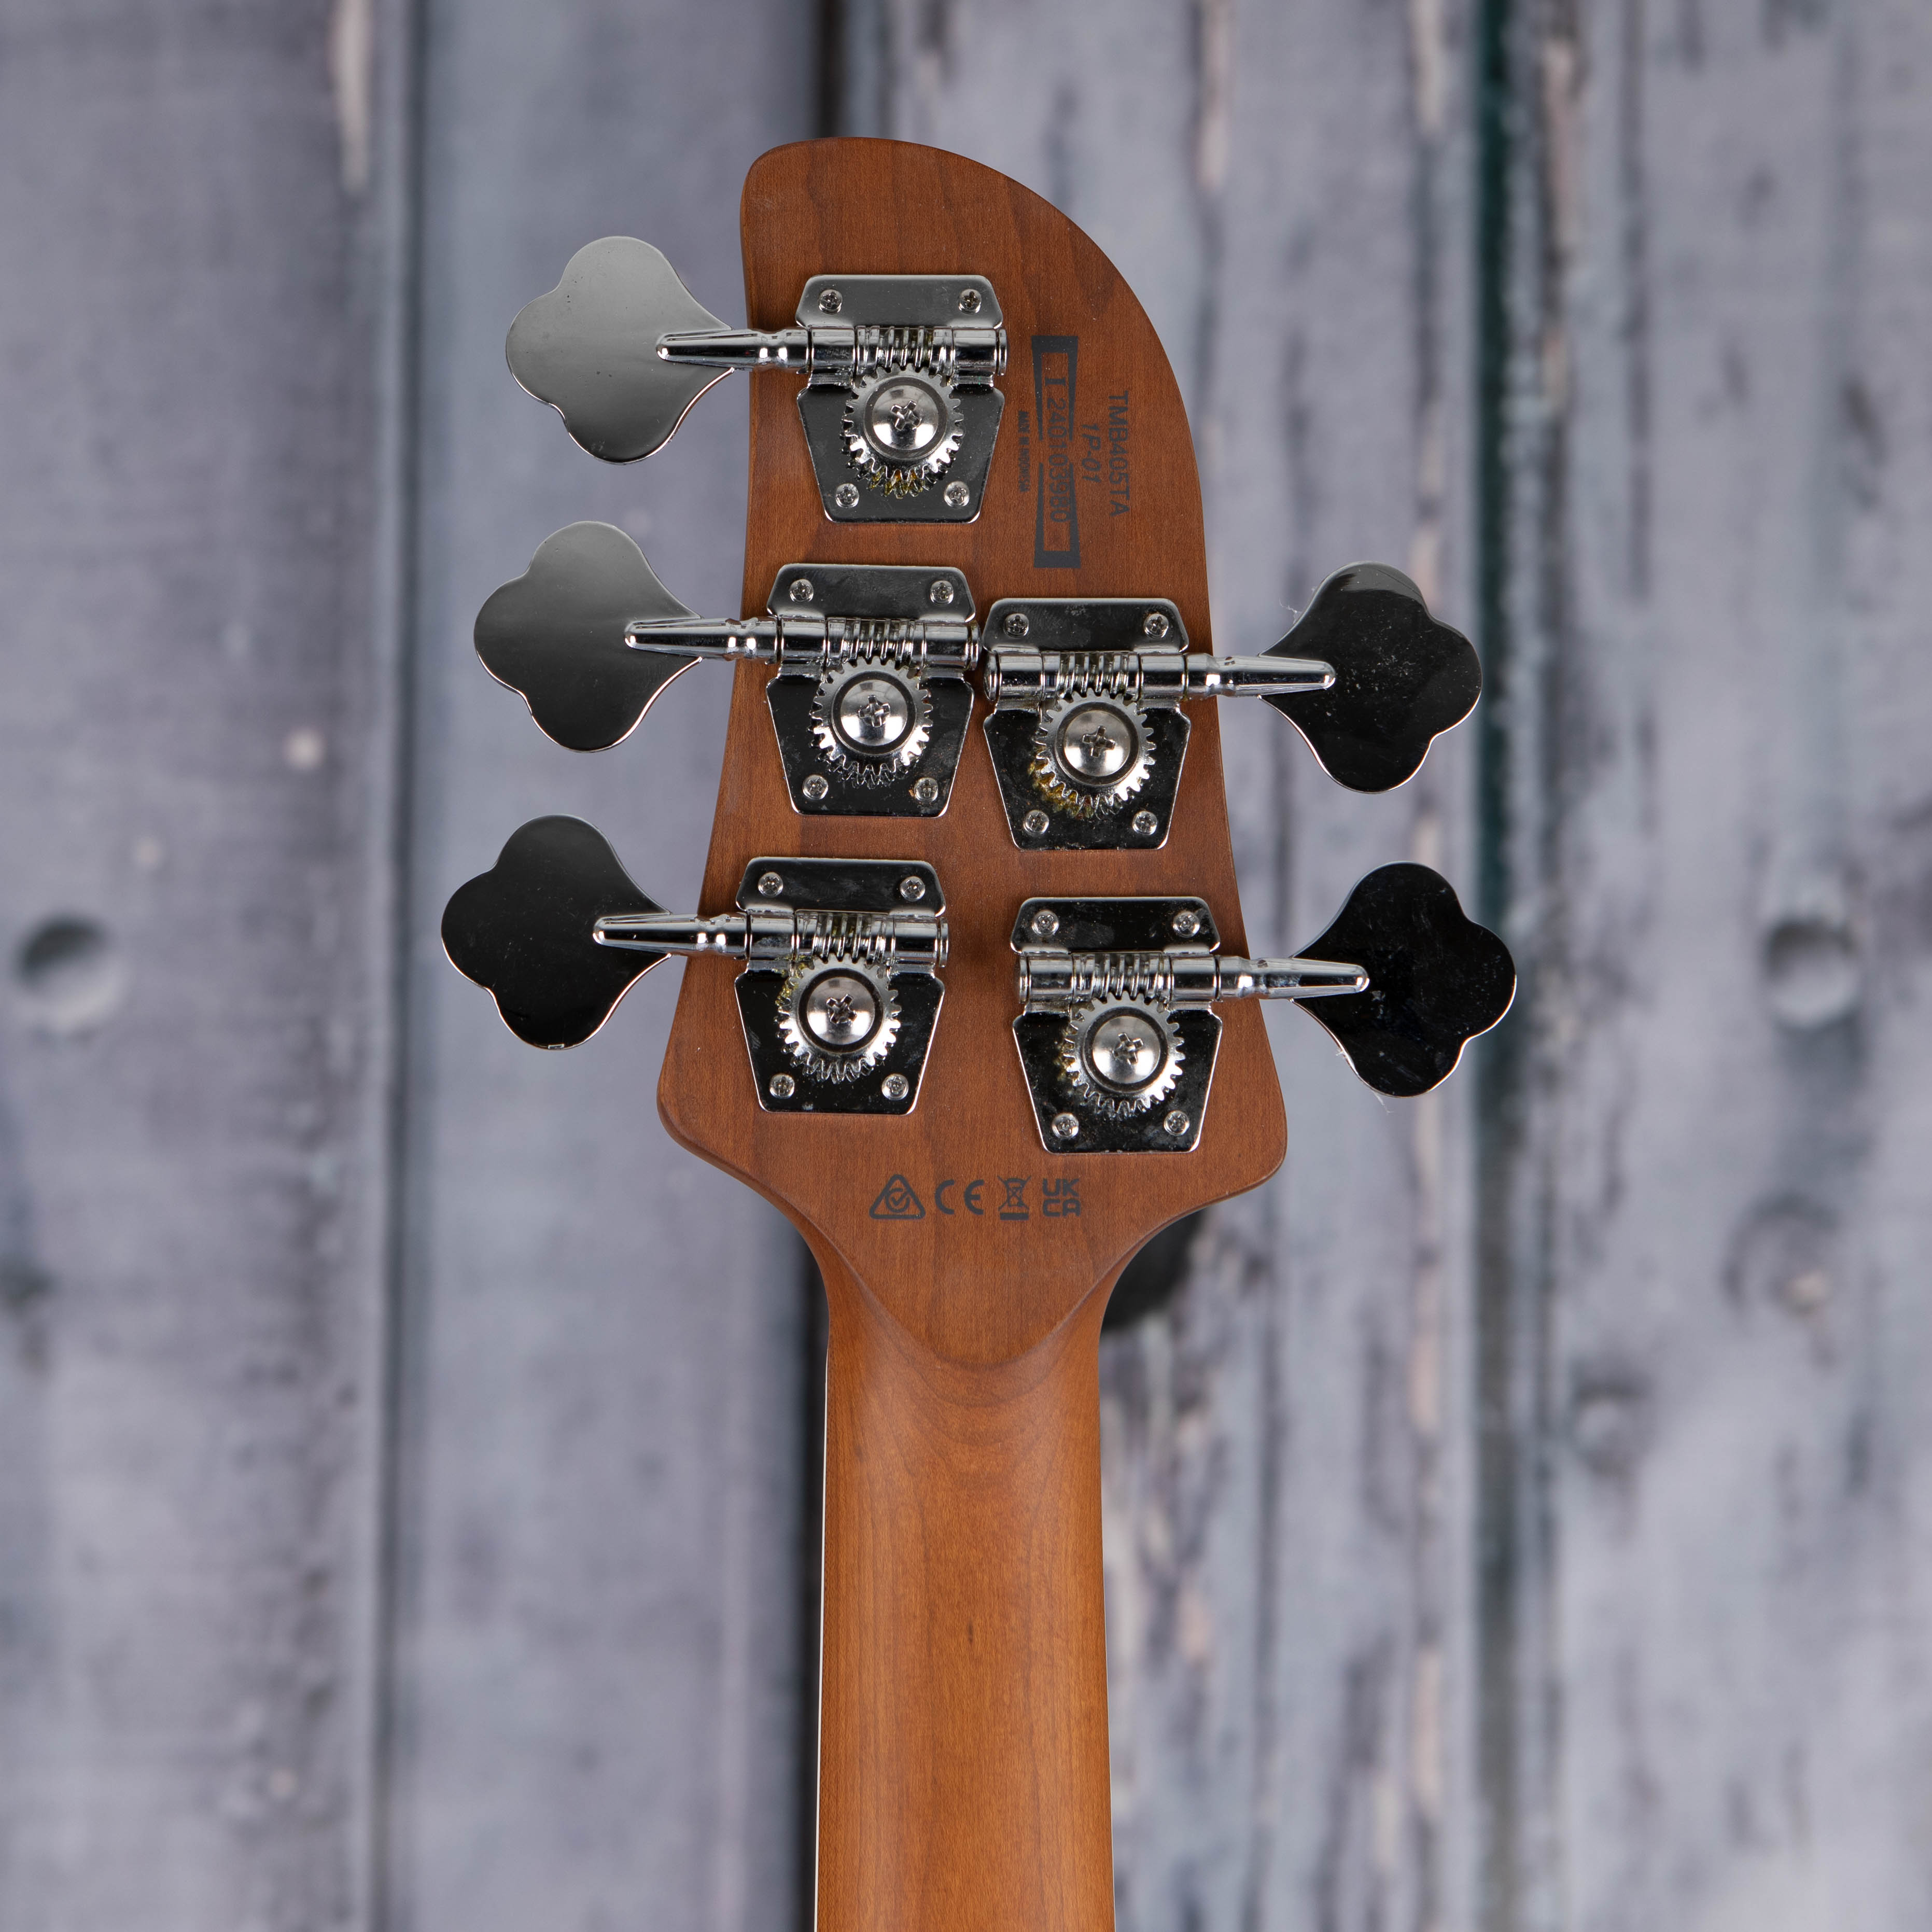 Ibanez Talman TMB405TA 5-String Electric Bass Guitar, Cosmic Blue Starburst, back headstock